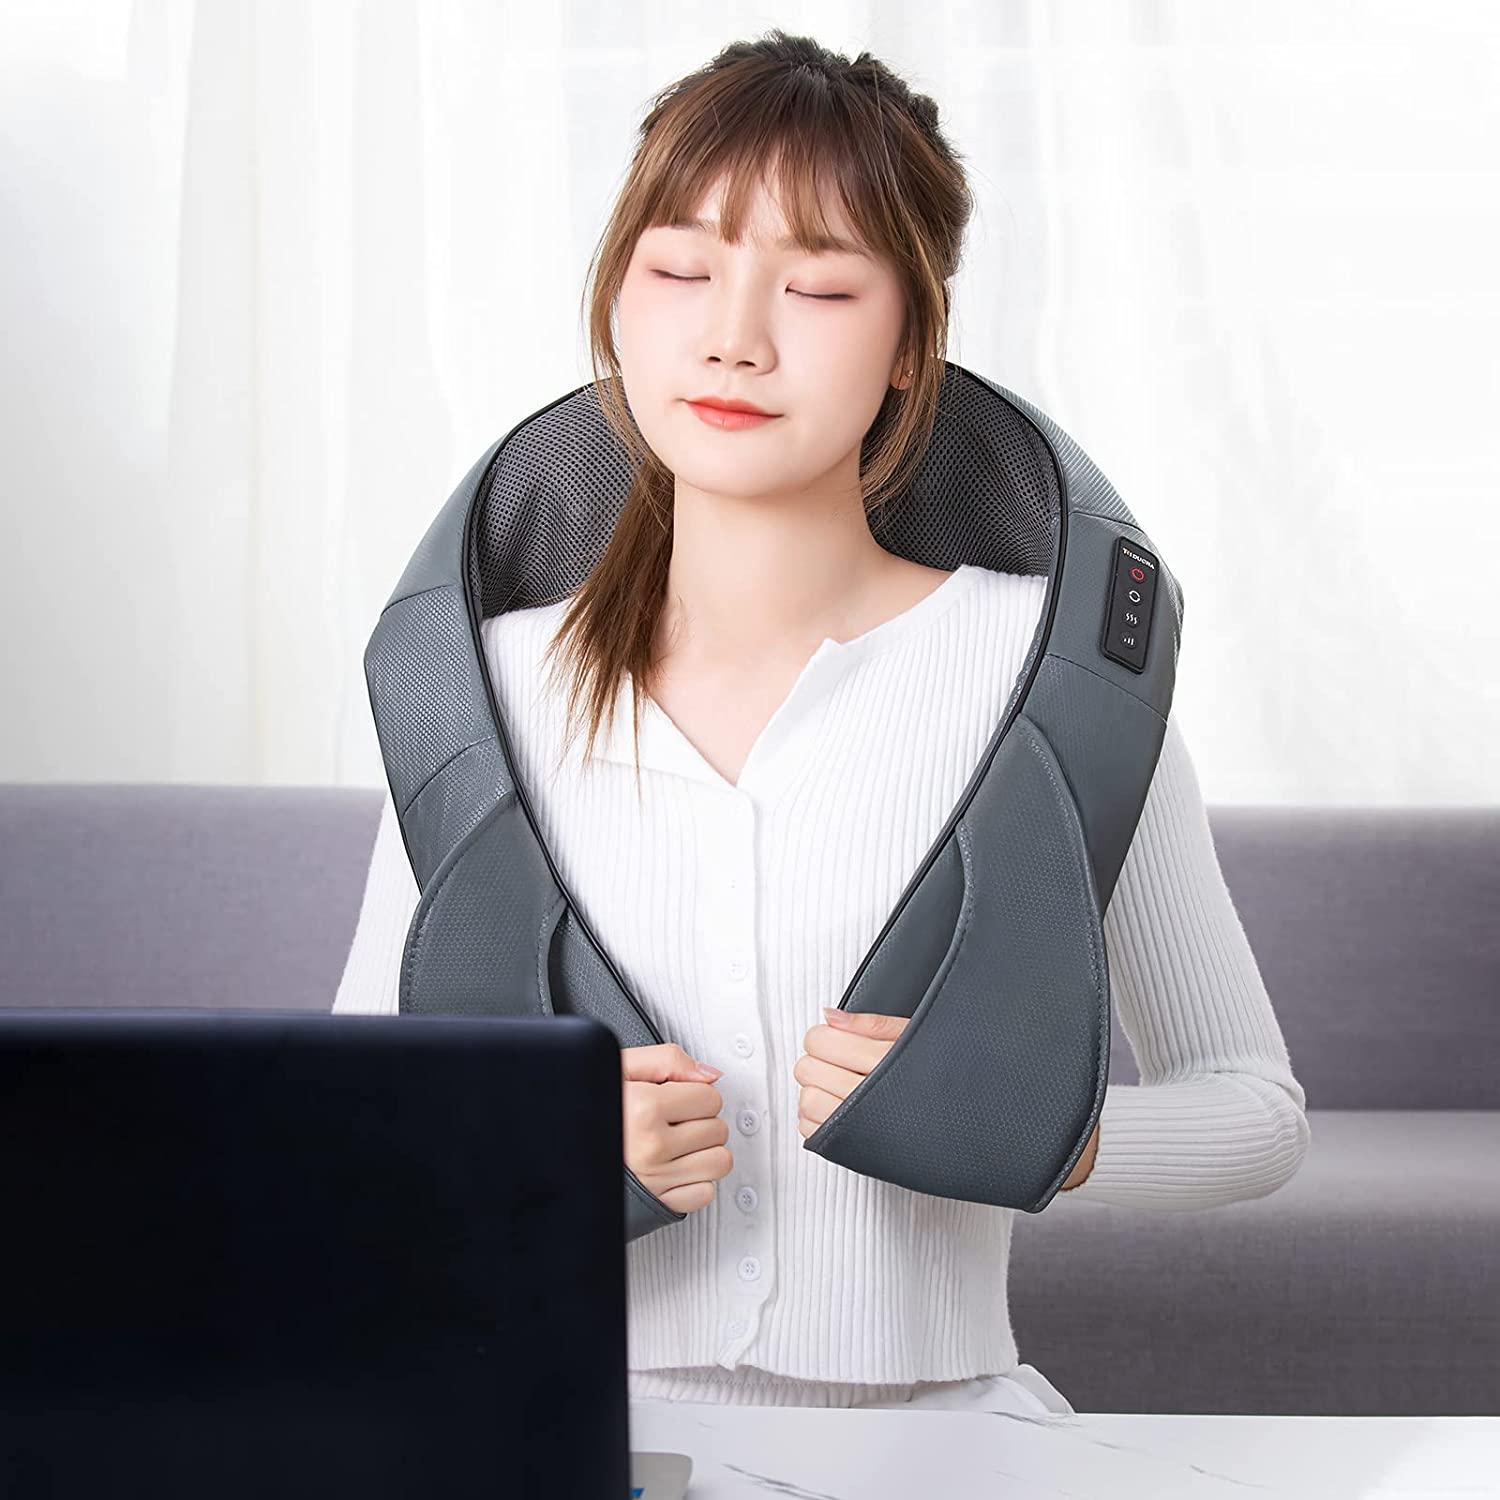  Snailax Cordless Massager - Shiatsu Neck and Shoulder Massager  with Heat, Portable, Lumbar, Foot Electric Massage Pillow : Health &  Household